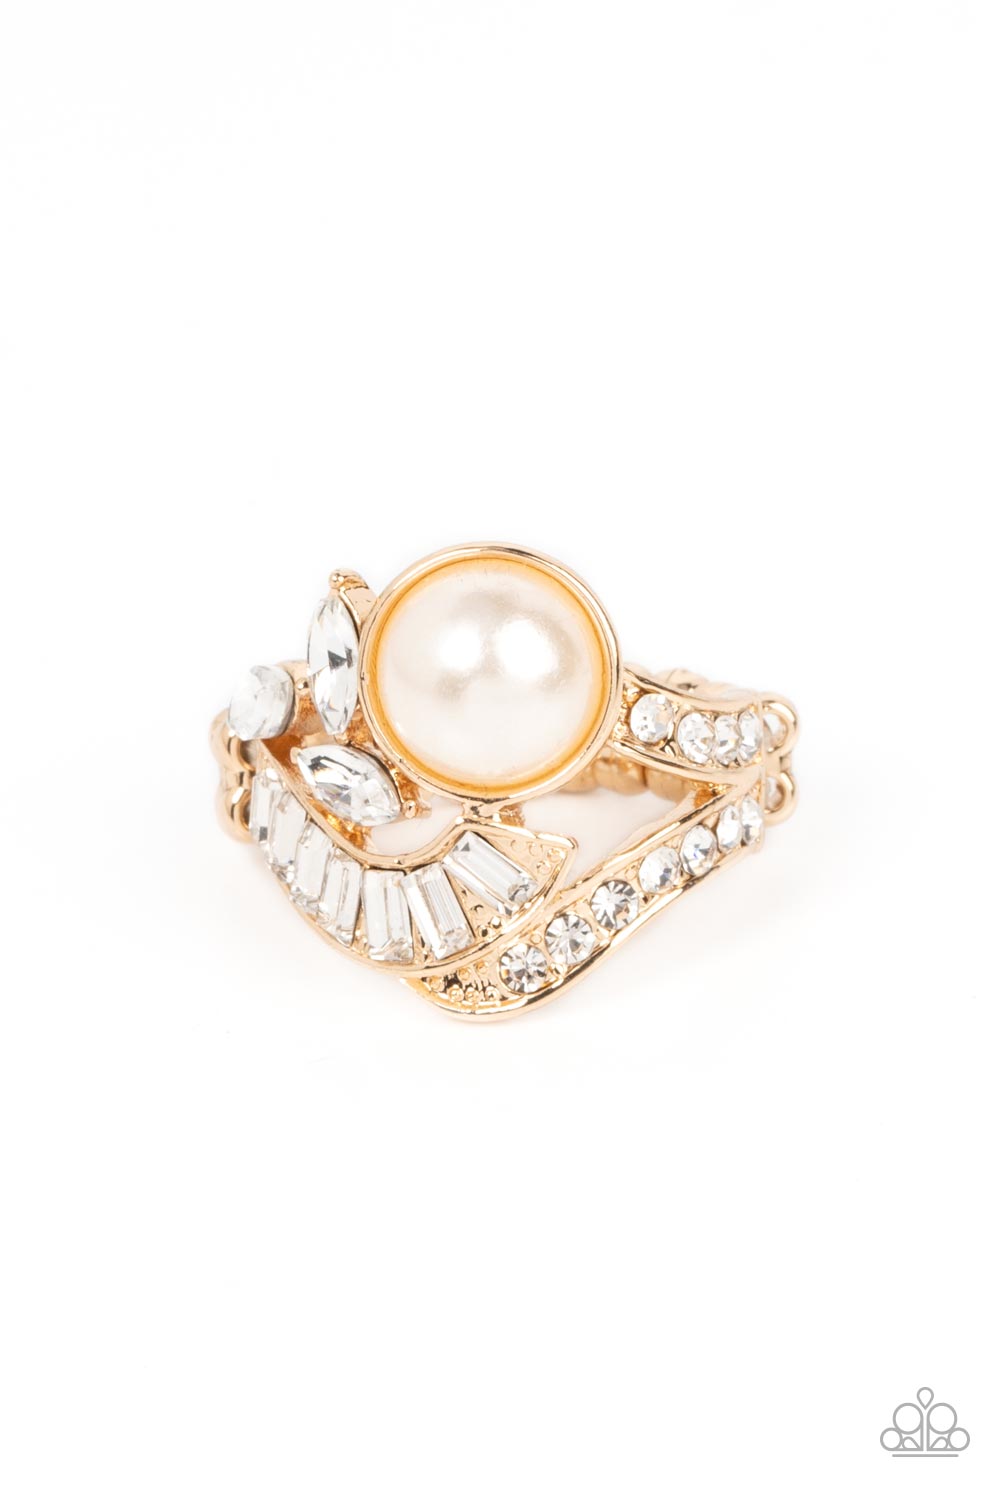 SELFIE-Made Millionaire - Gold White Pearl Rhinestone Ring